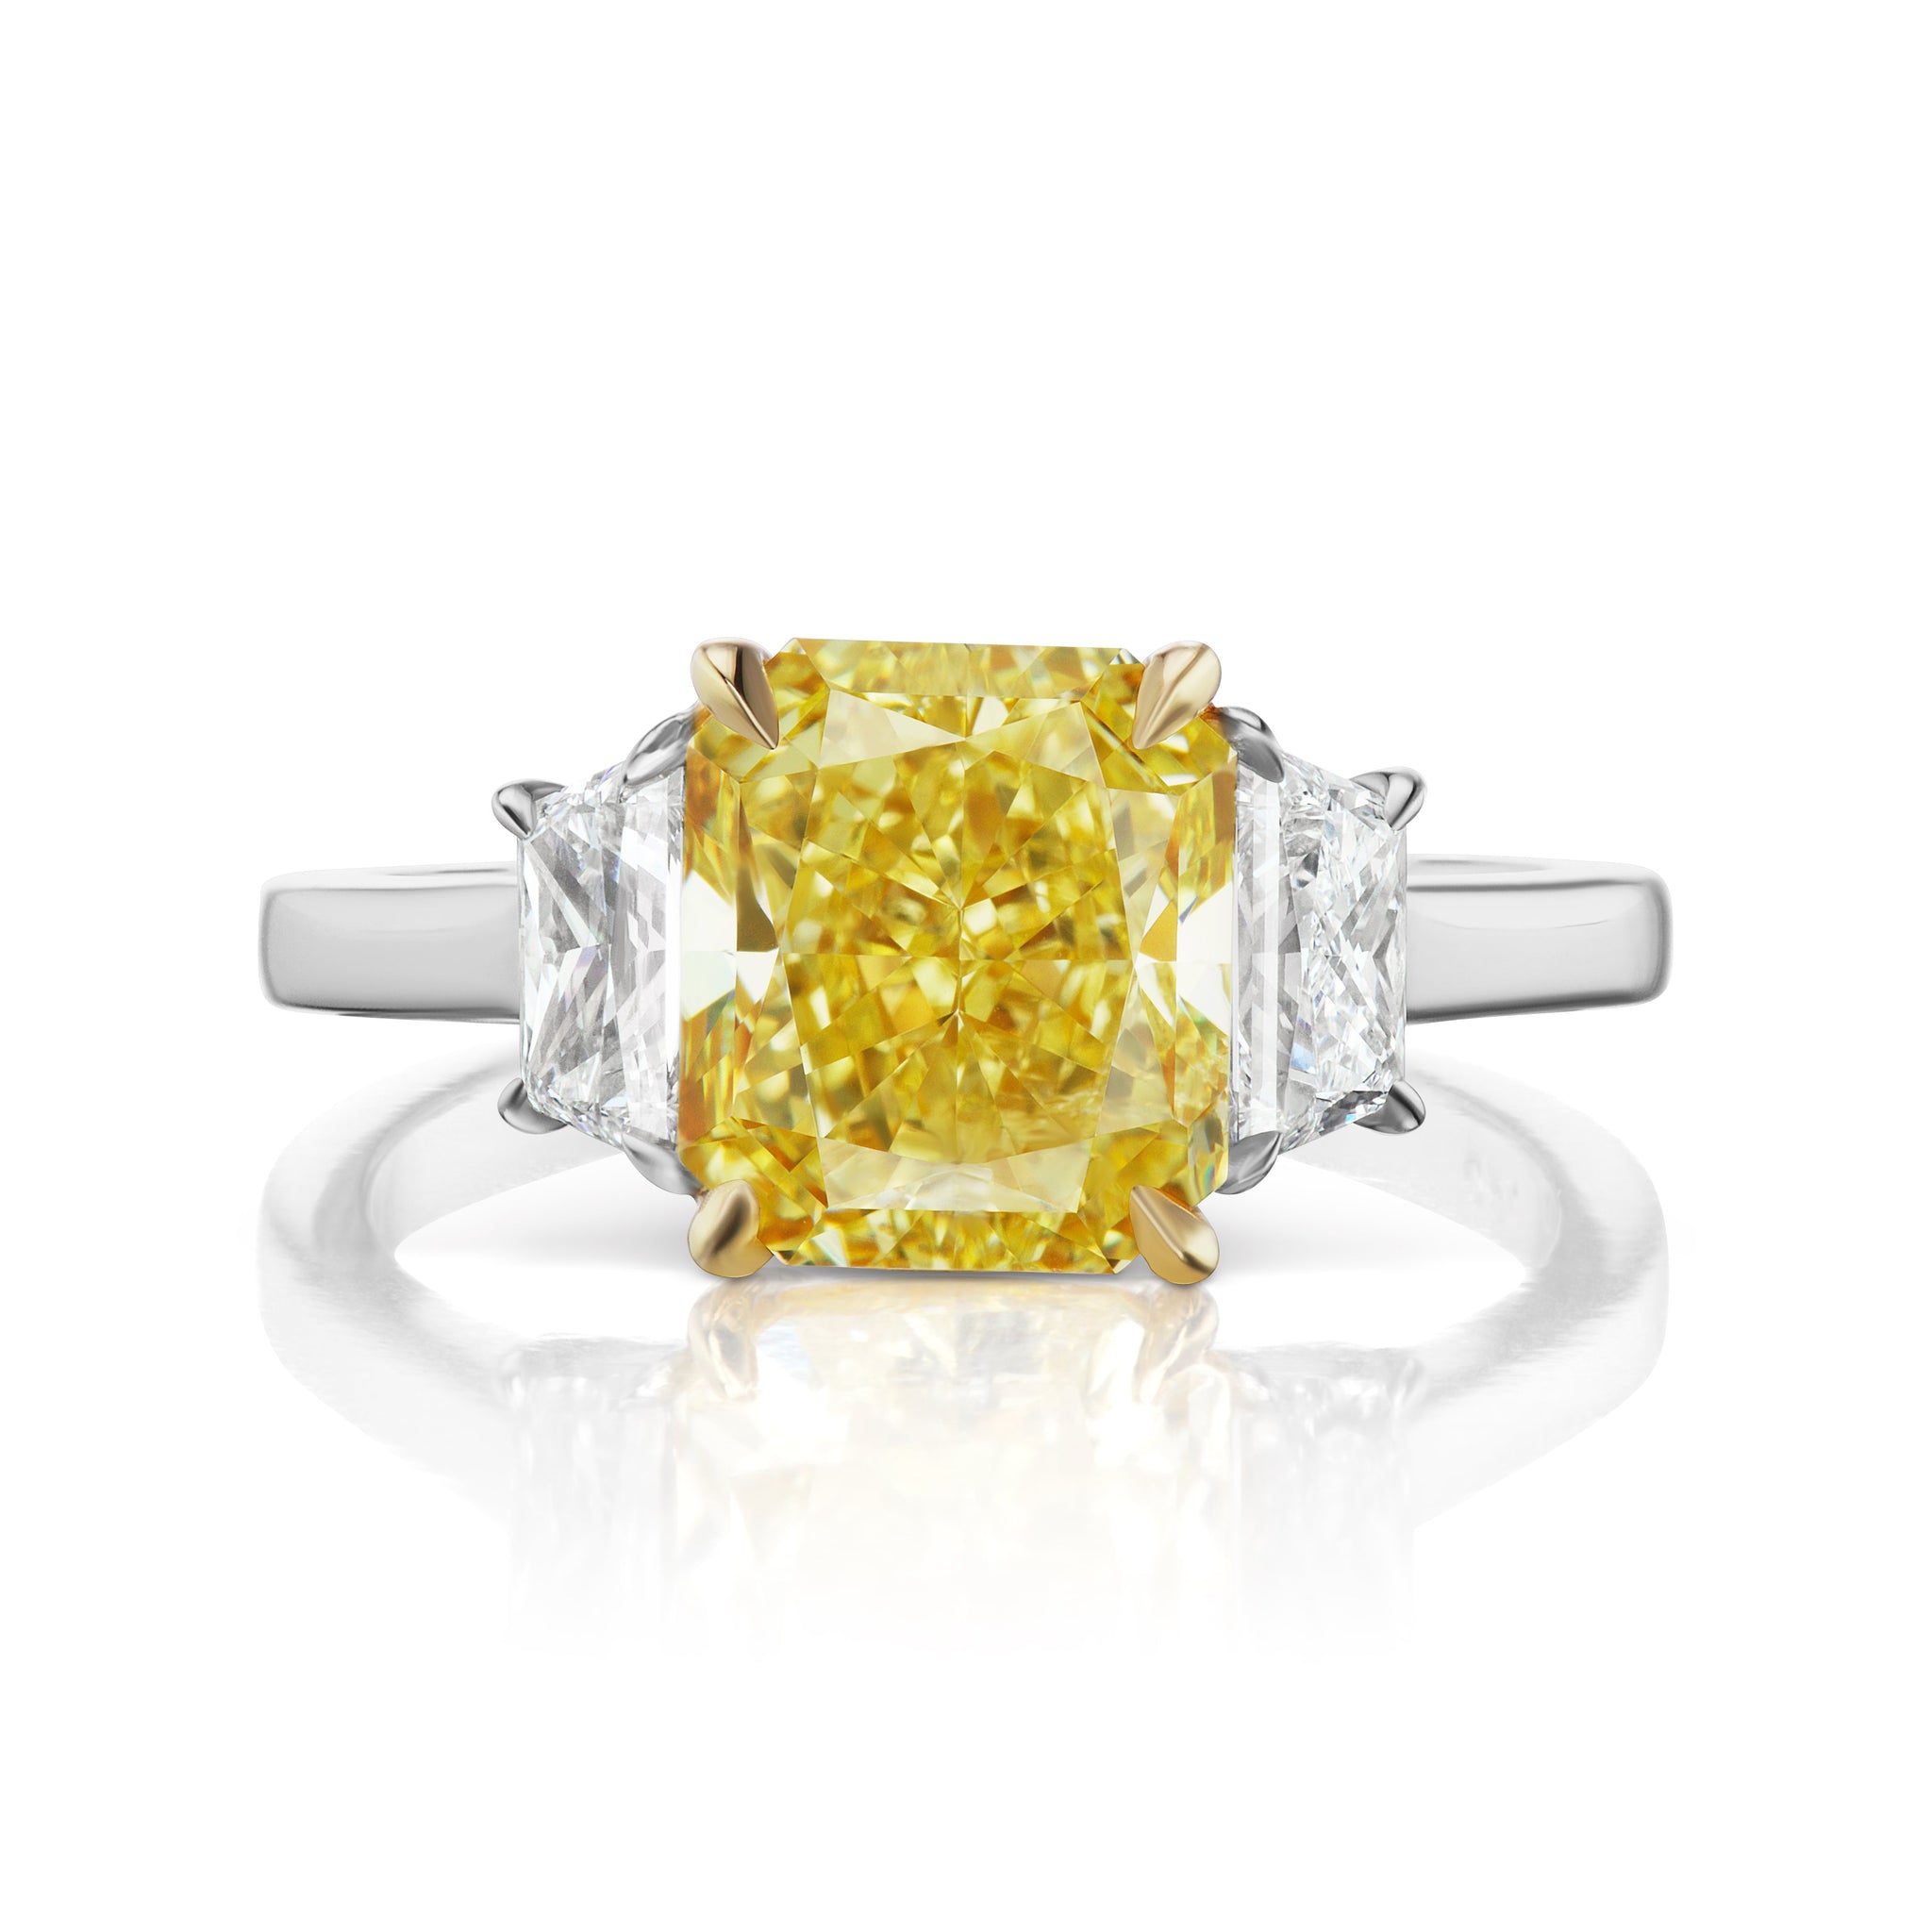 Fancy Intense Yellow Diamond Ring Radiant Cut 5 Carat Three Stone Ring in Platinum & 18K Gold Front View